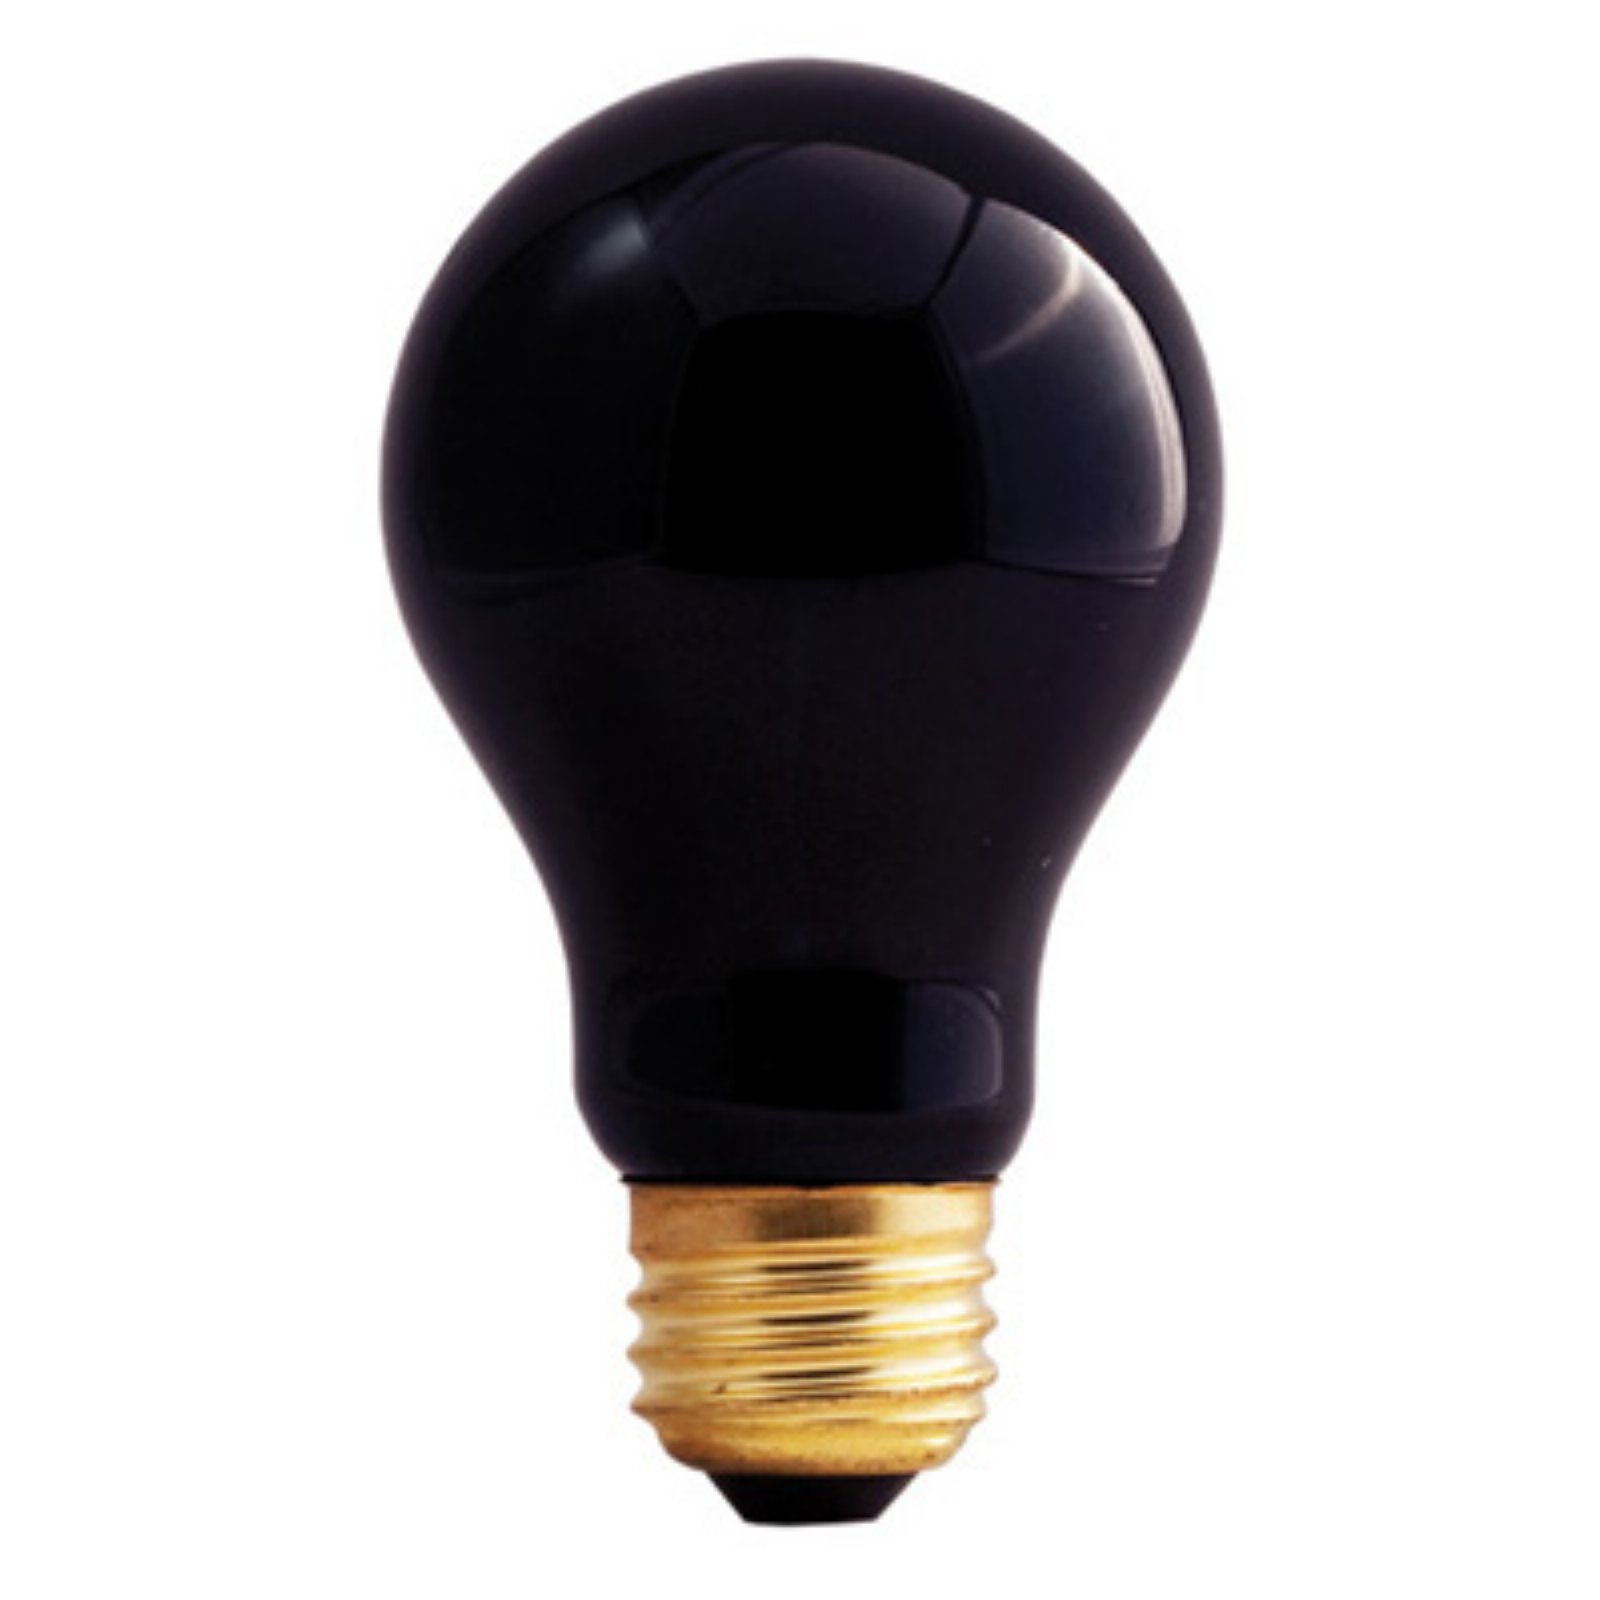 Bulbrite 75W Standard Black Light Incandescent Light Bulb - image 1 of 4